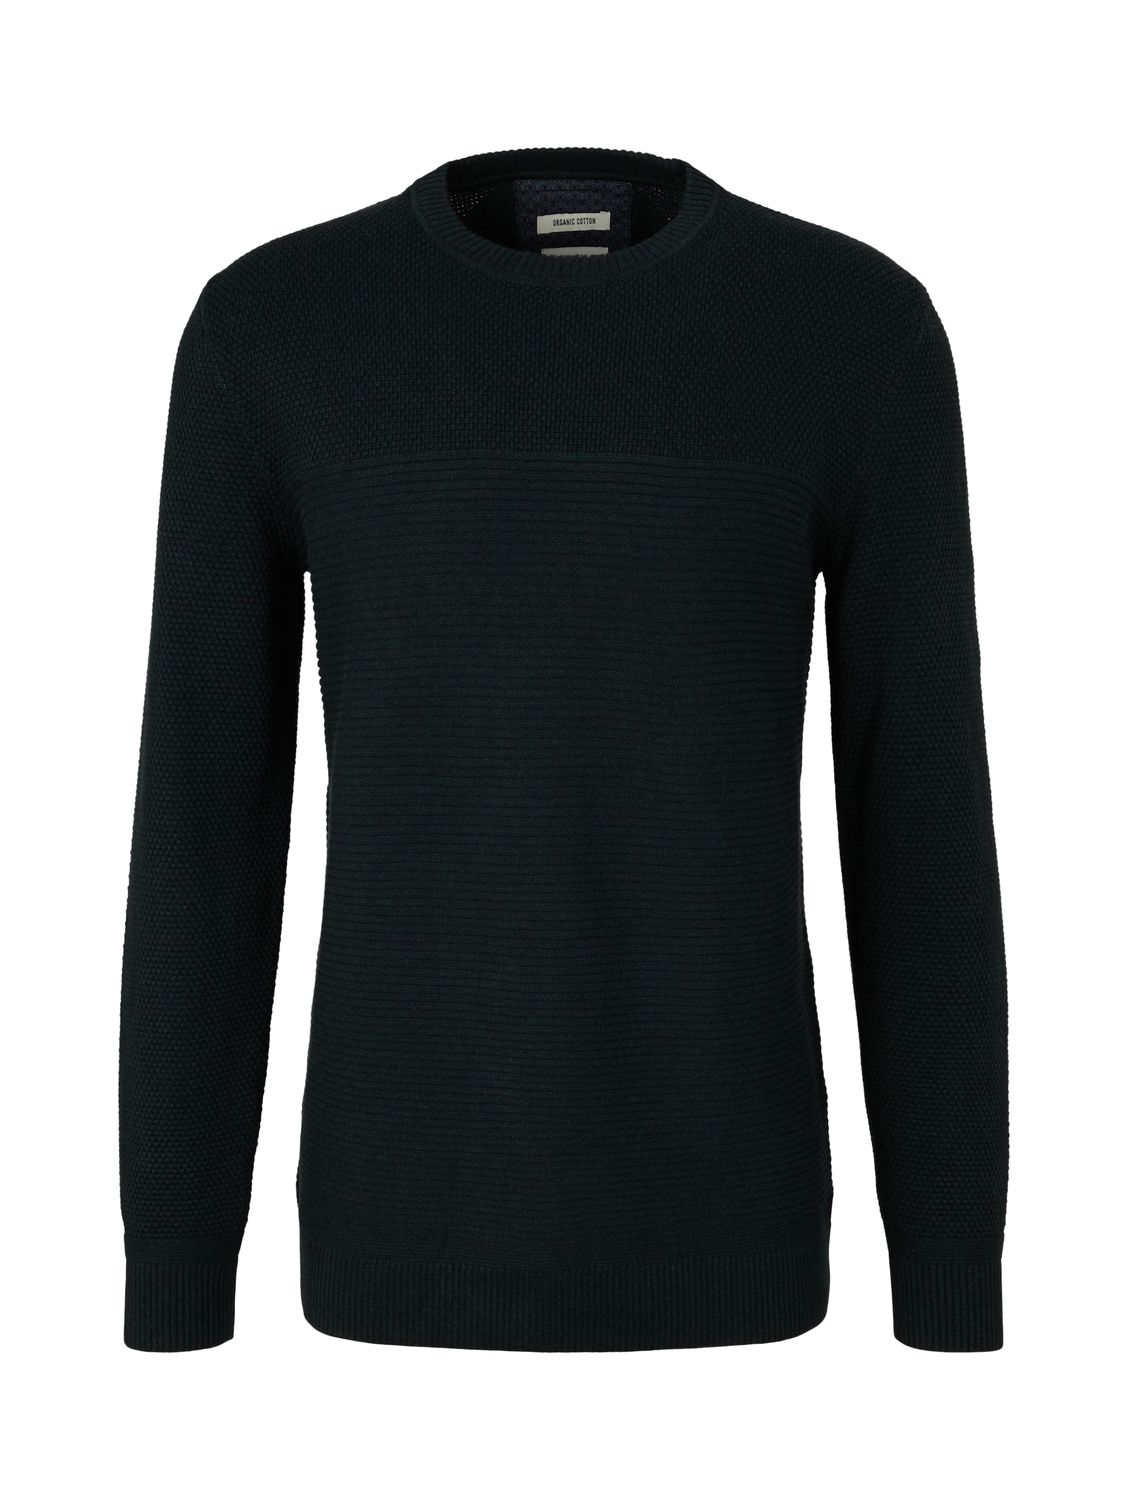 Пуловер Tom Tailor BASIC STRUCTURED, черный пуловер tom tailor denim structured doublelayer серый